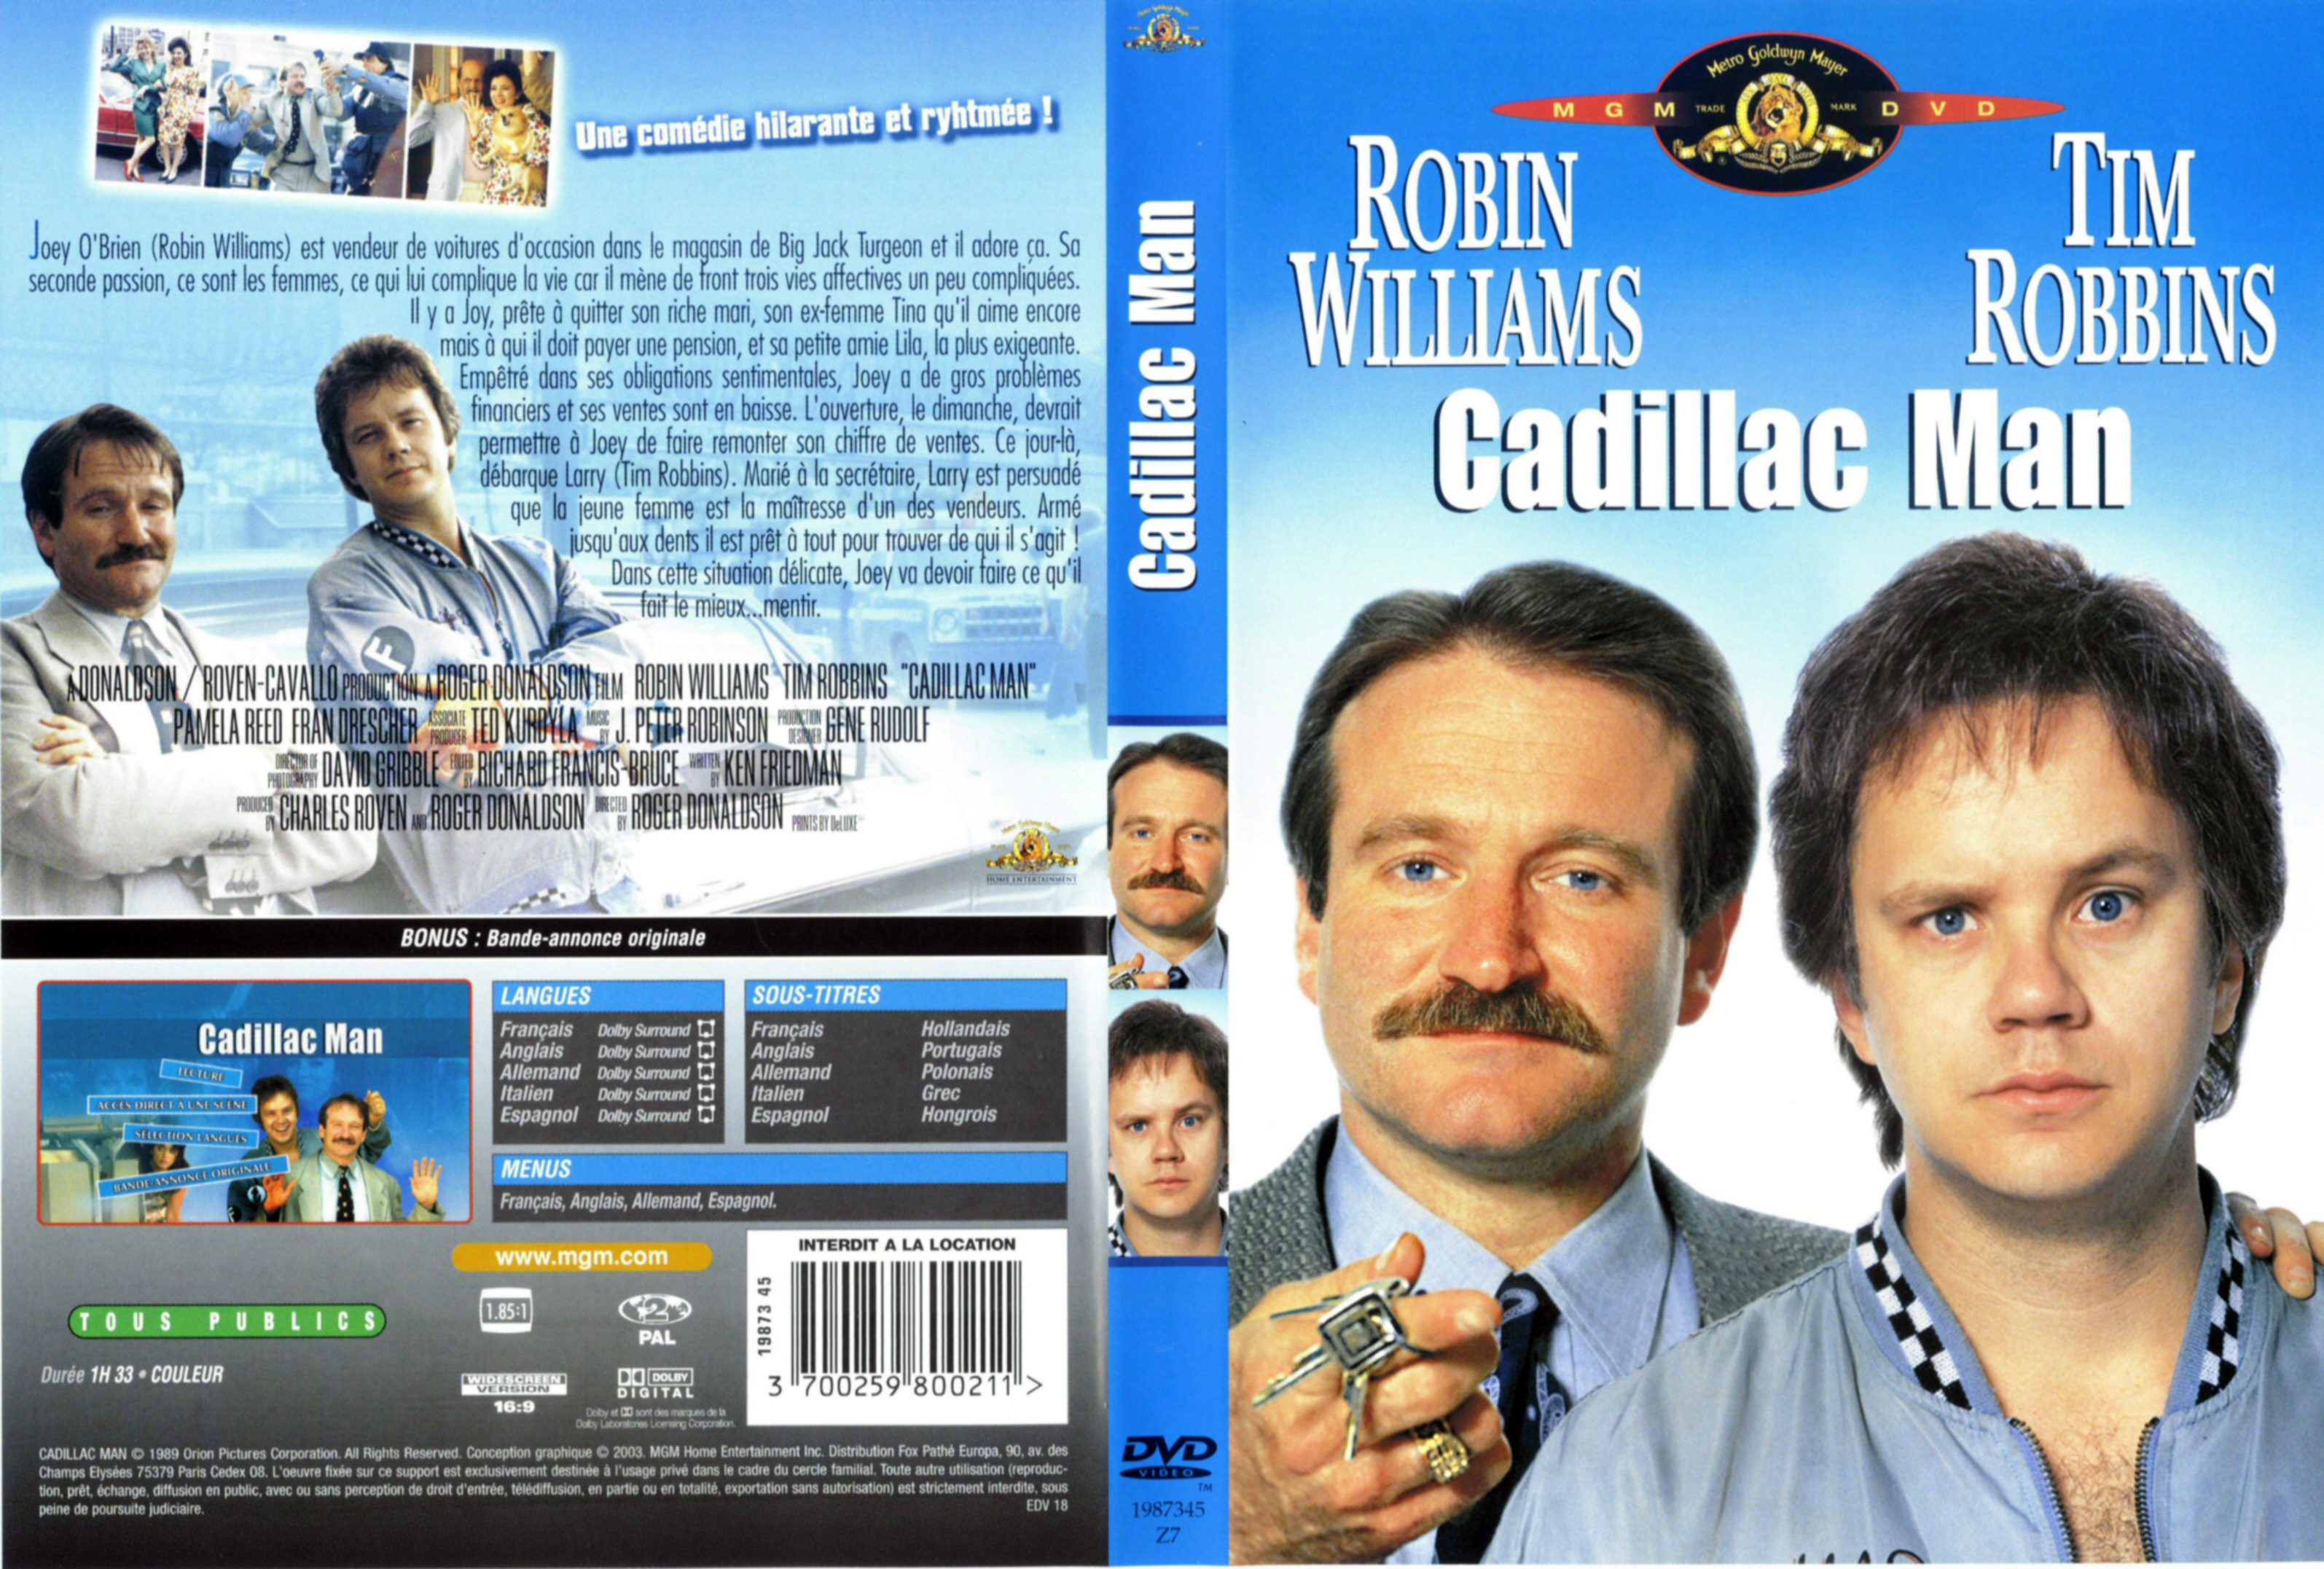 Jaquette DVD Cadillac man